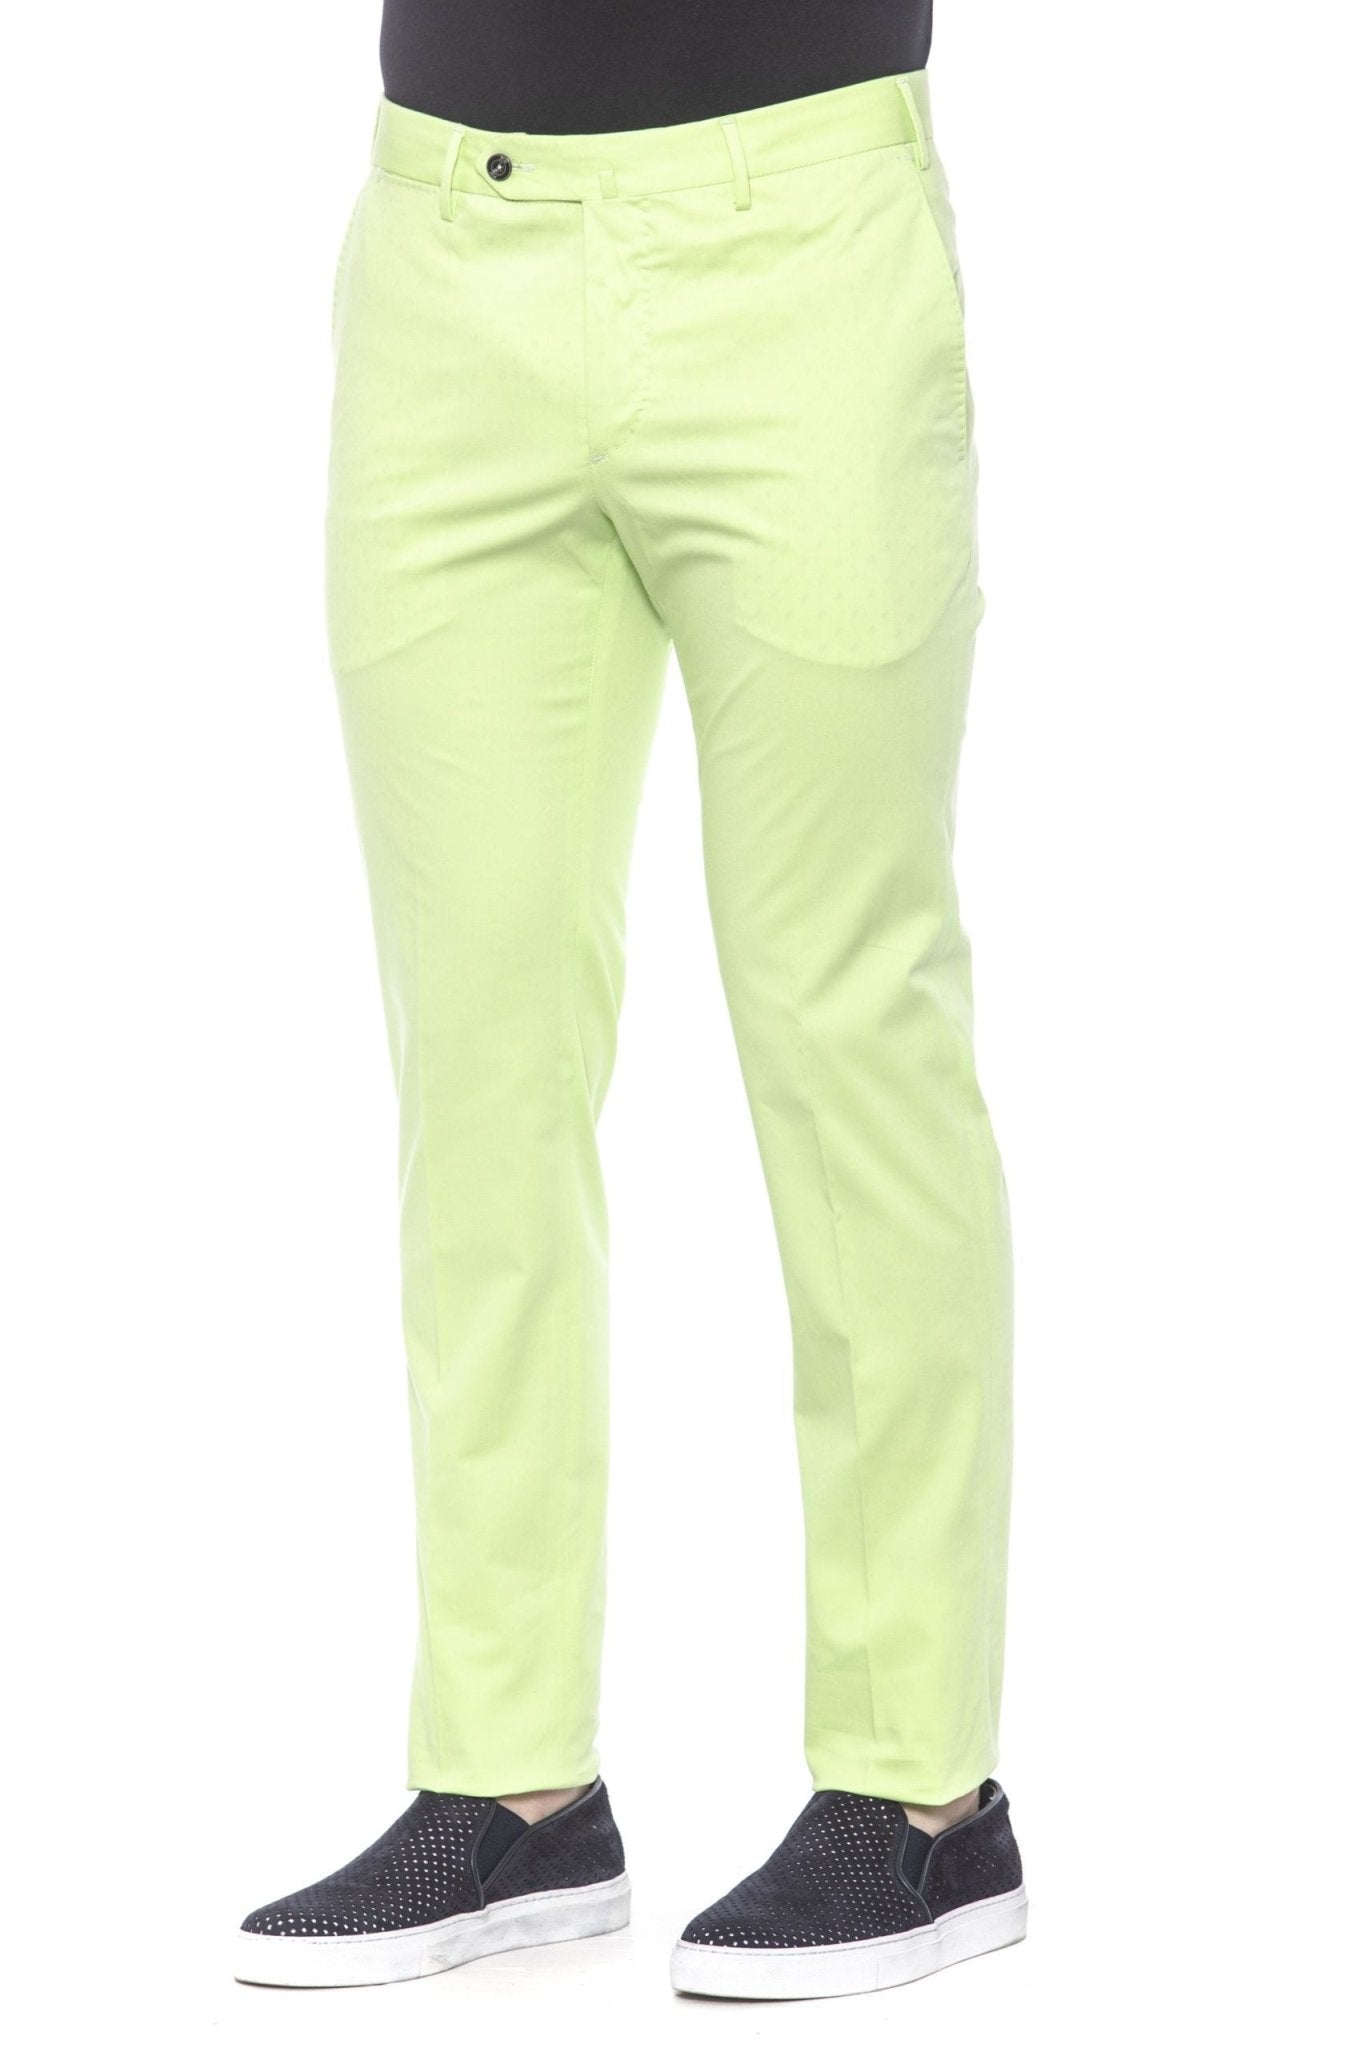 PT Torino Green Cotton Jeans & Pant - Fizigo